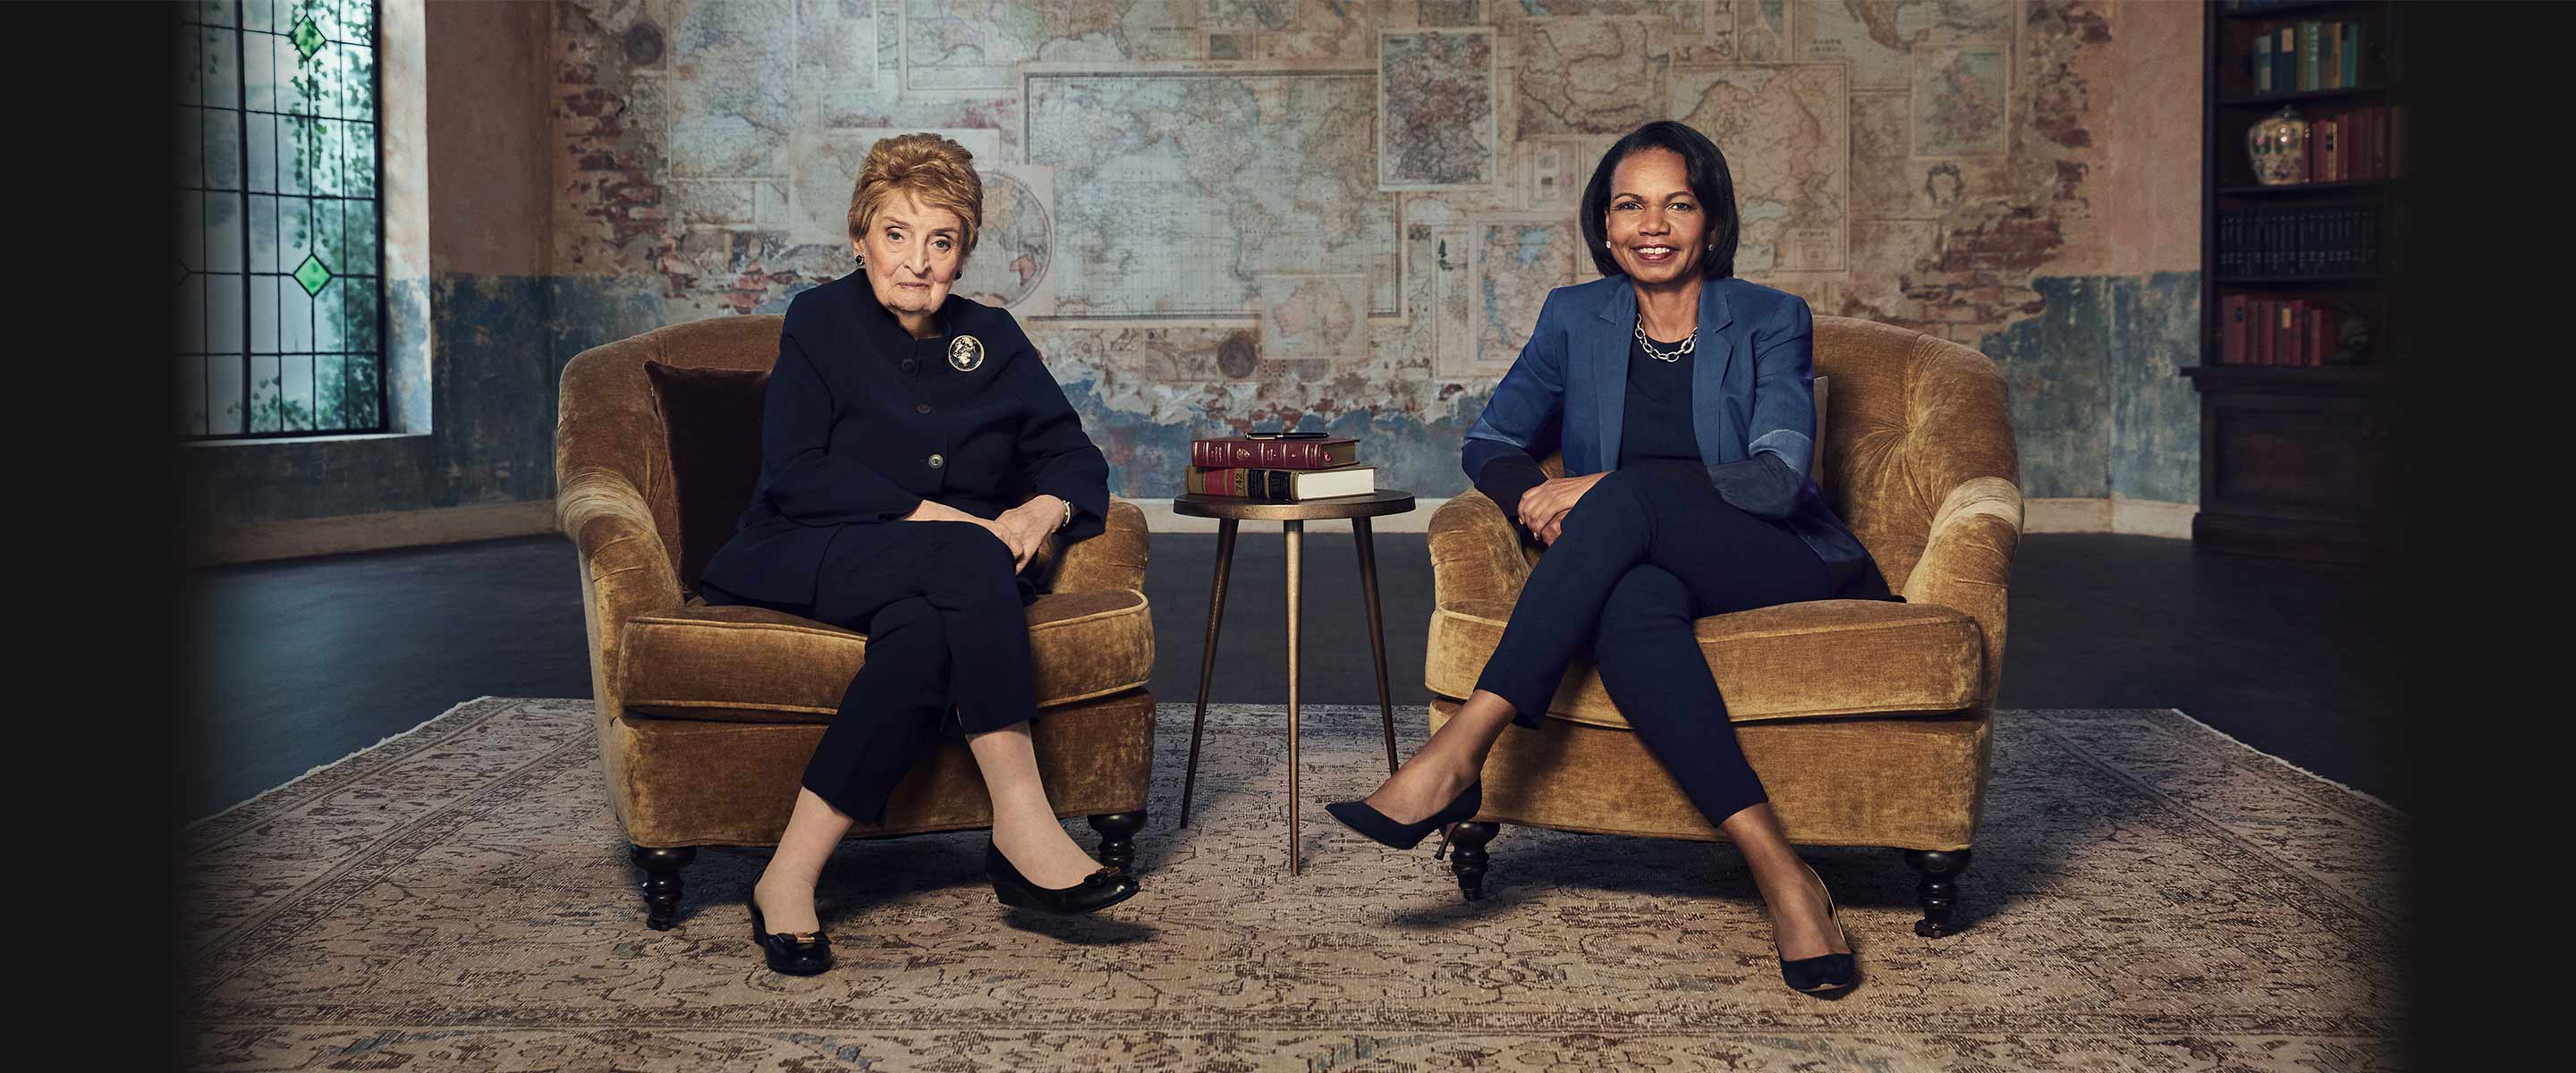 Madeleine Albright and Condoleezza Rice Teach Diplomacy